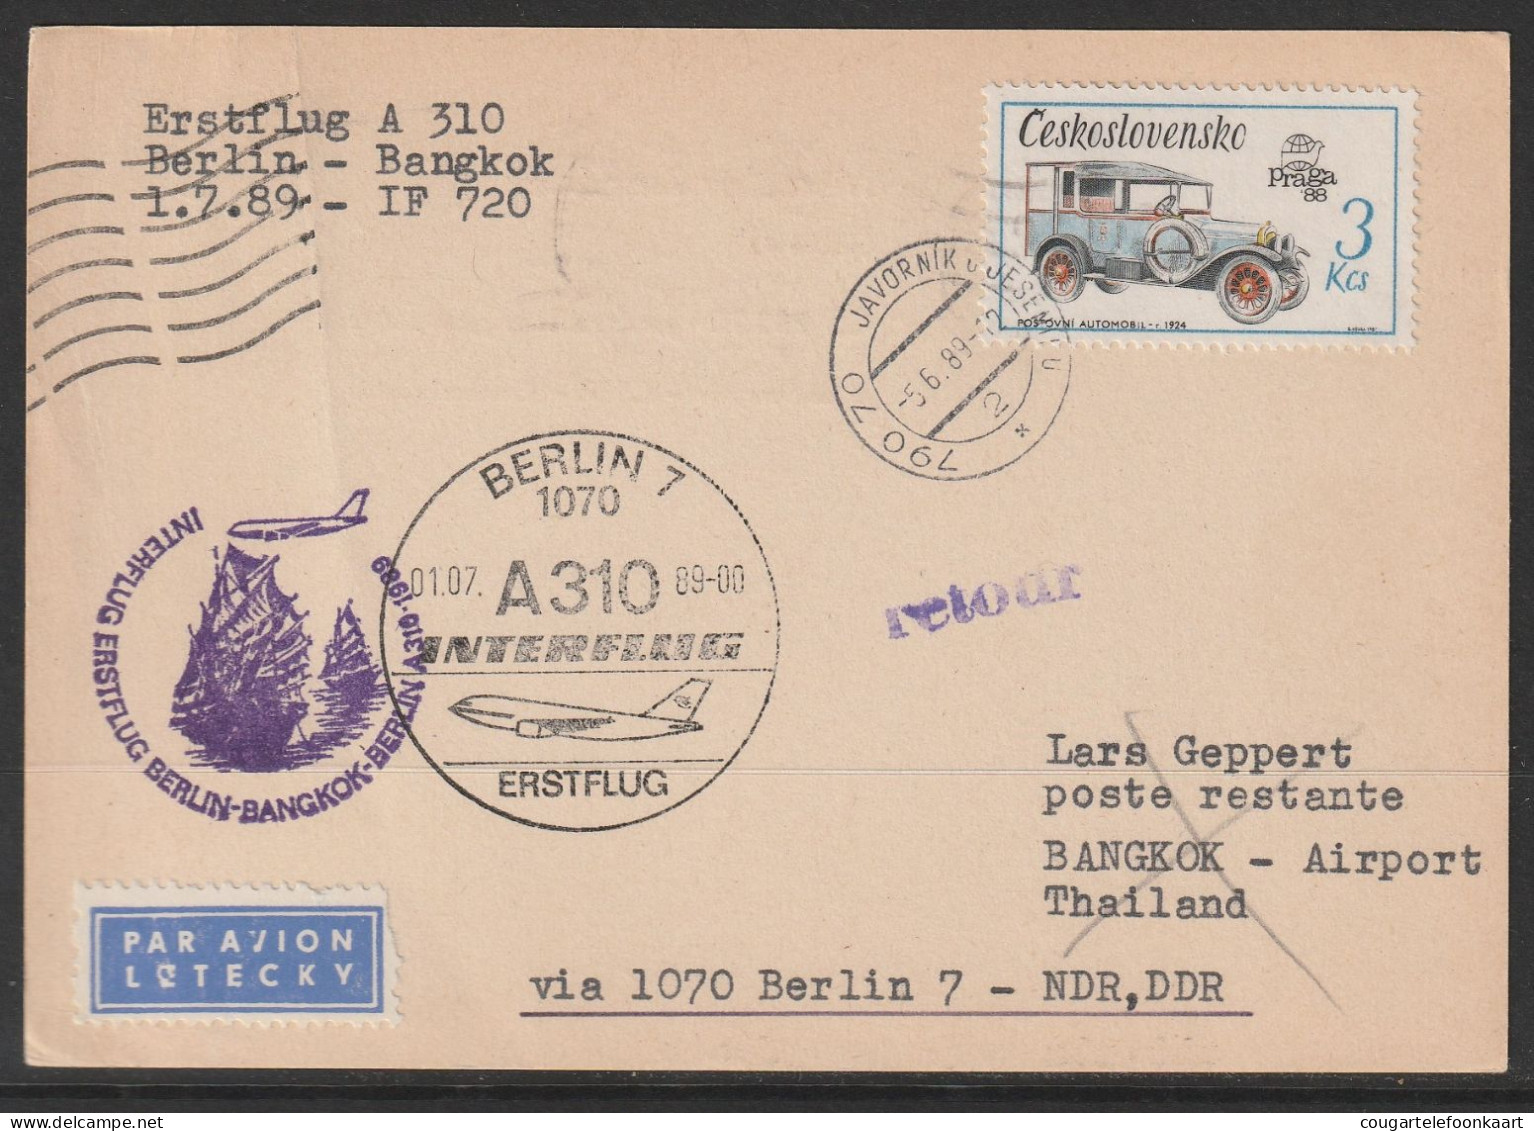 1989, Interflug, First Flight Card, Javornik-Bangkok, Feeder Mail - Luchtpost